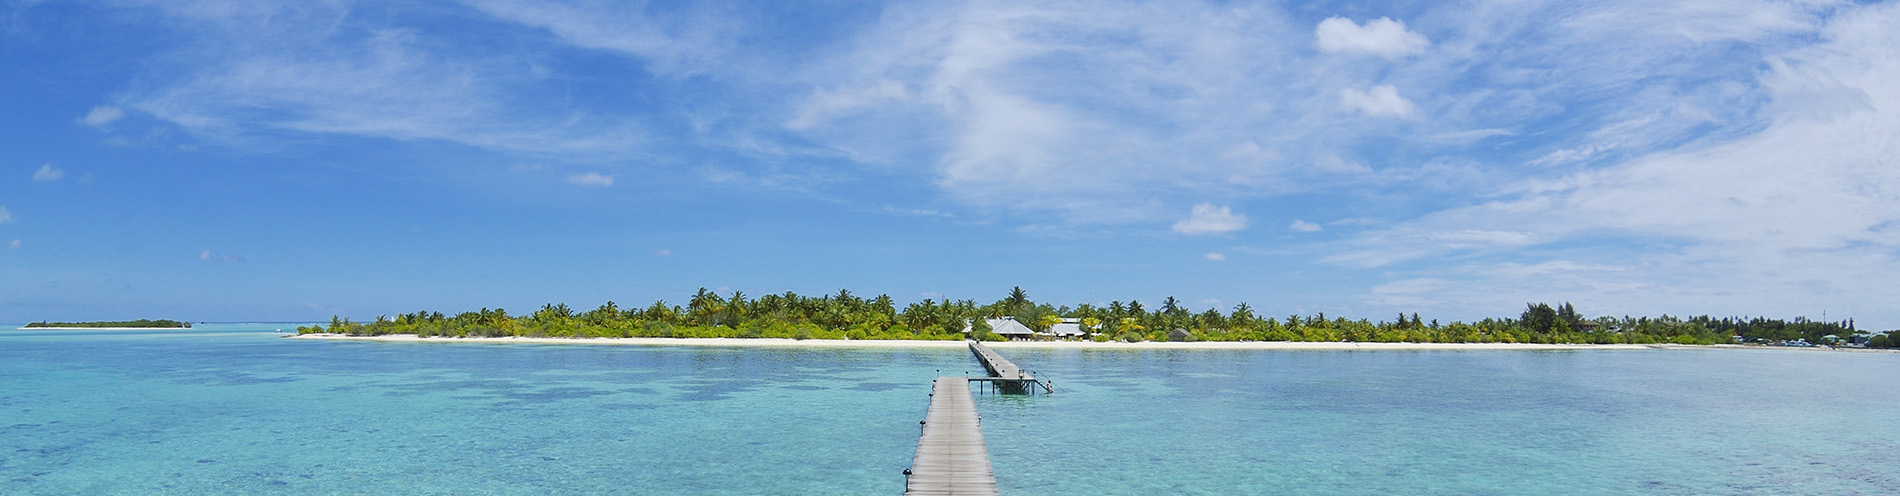 Budget resorts in maldives and cheap resorts in Maldives